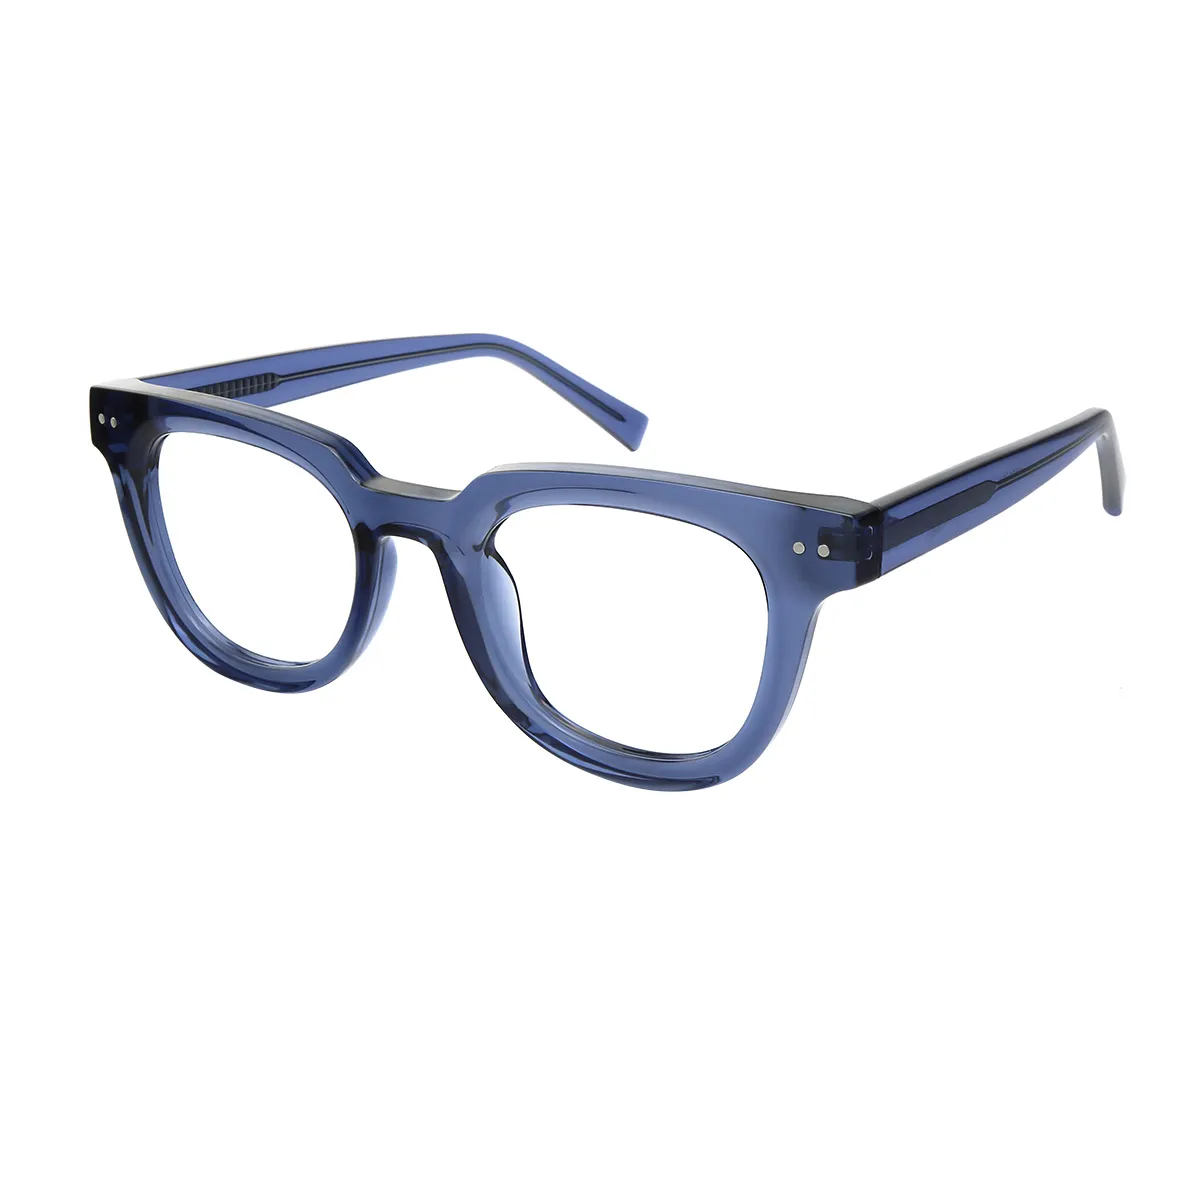 Codex - Square Blue-Translucent Glasses for Men & Women